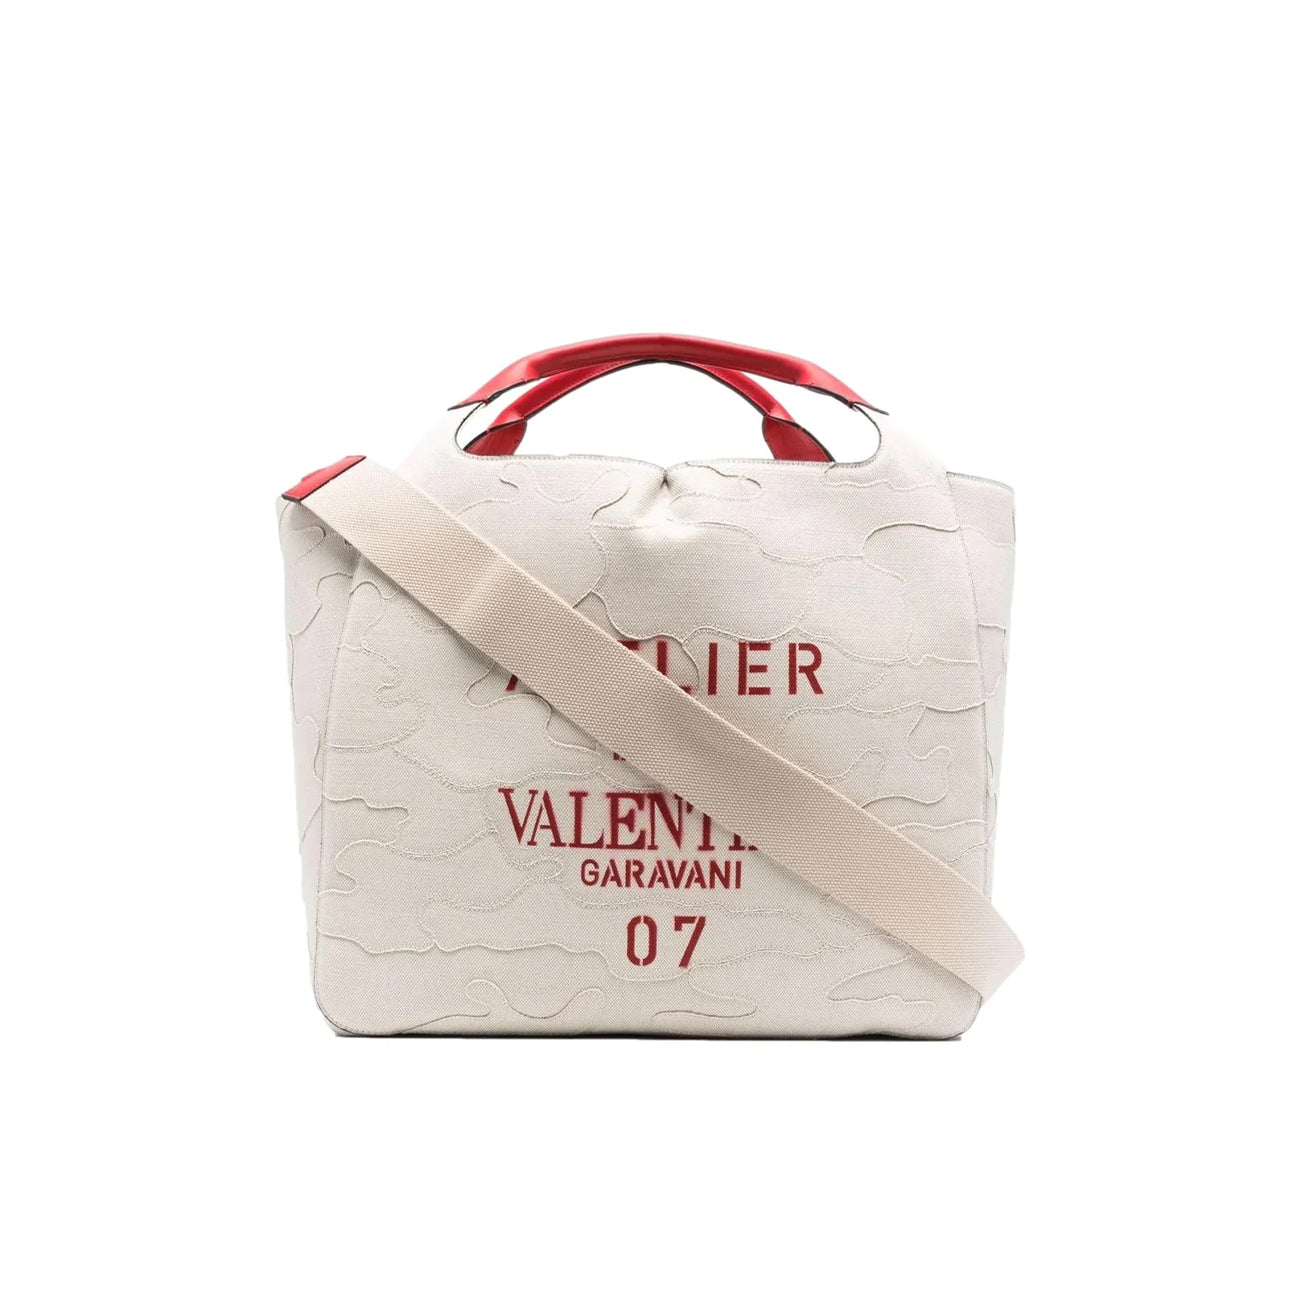 Valentino Garavani Sac Atelier 07 Edition Natural Tote Bag